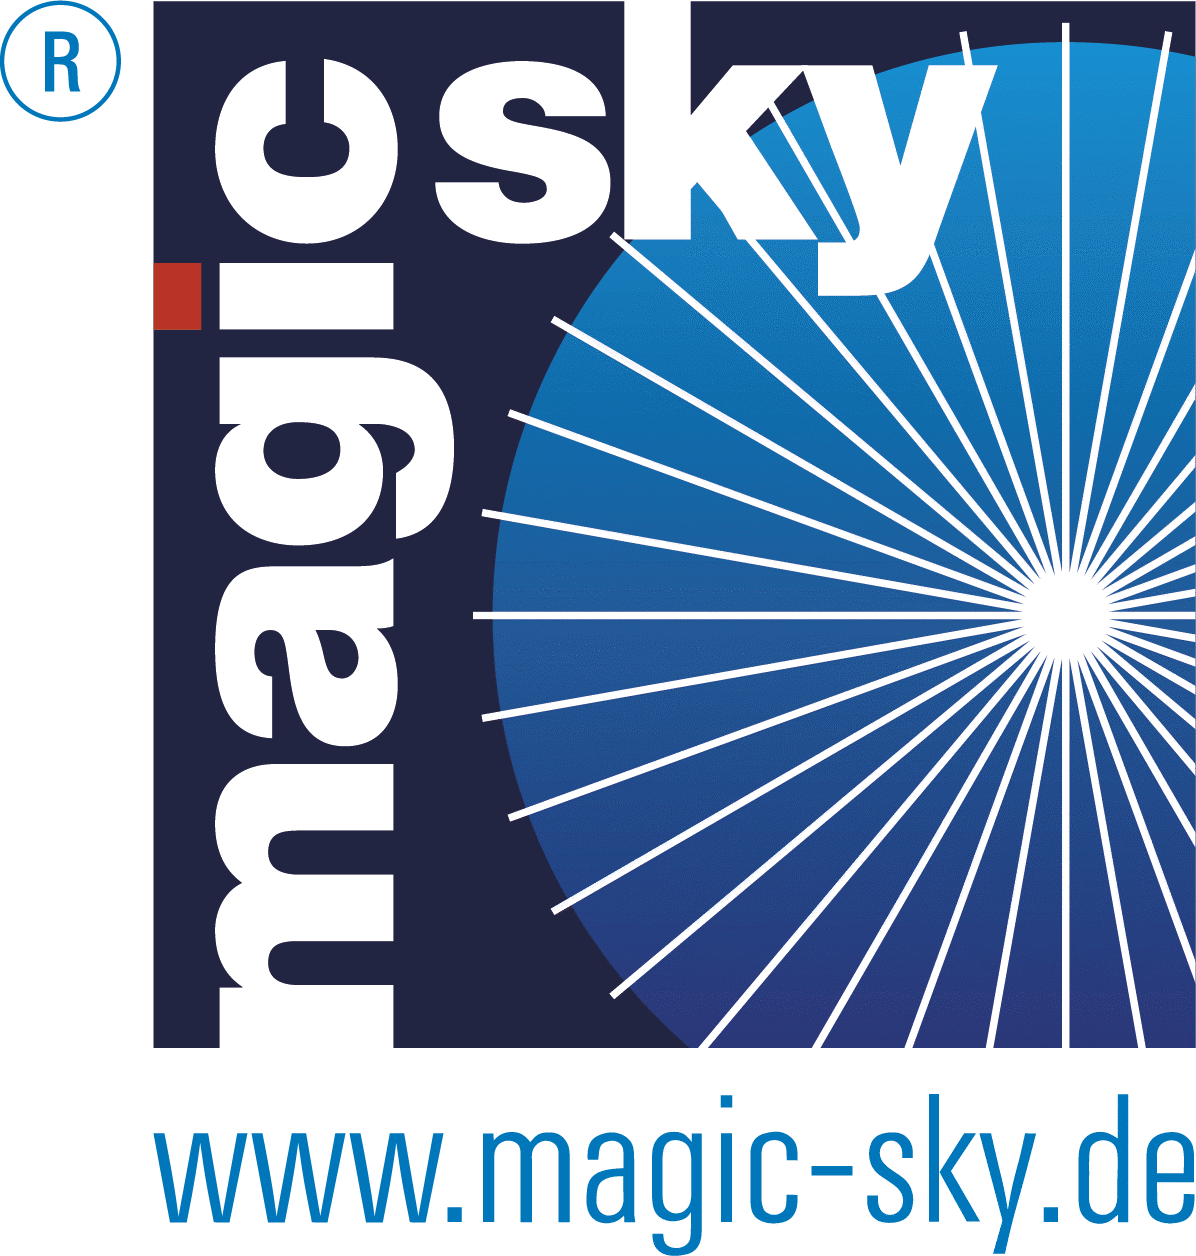 Magic Sky GmbH